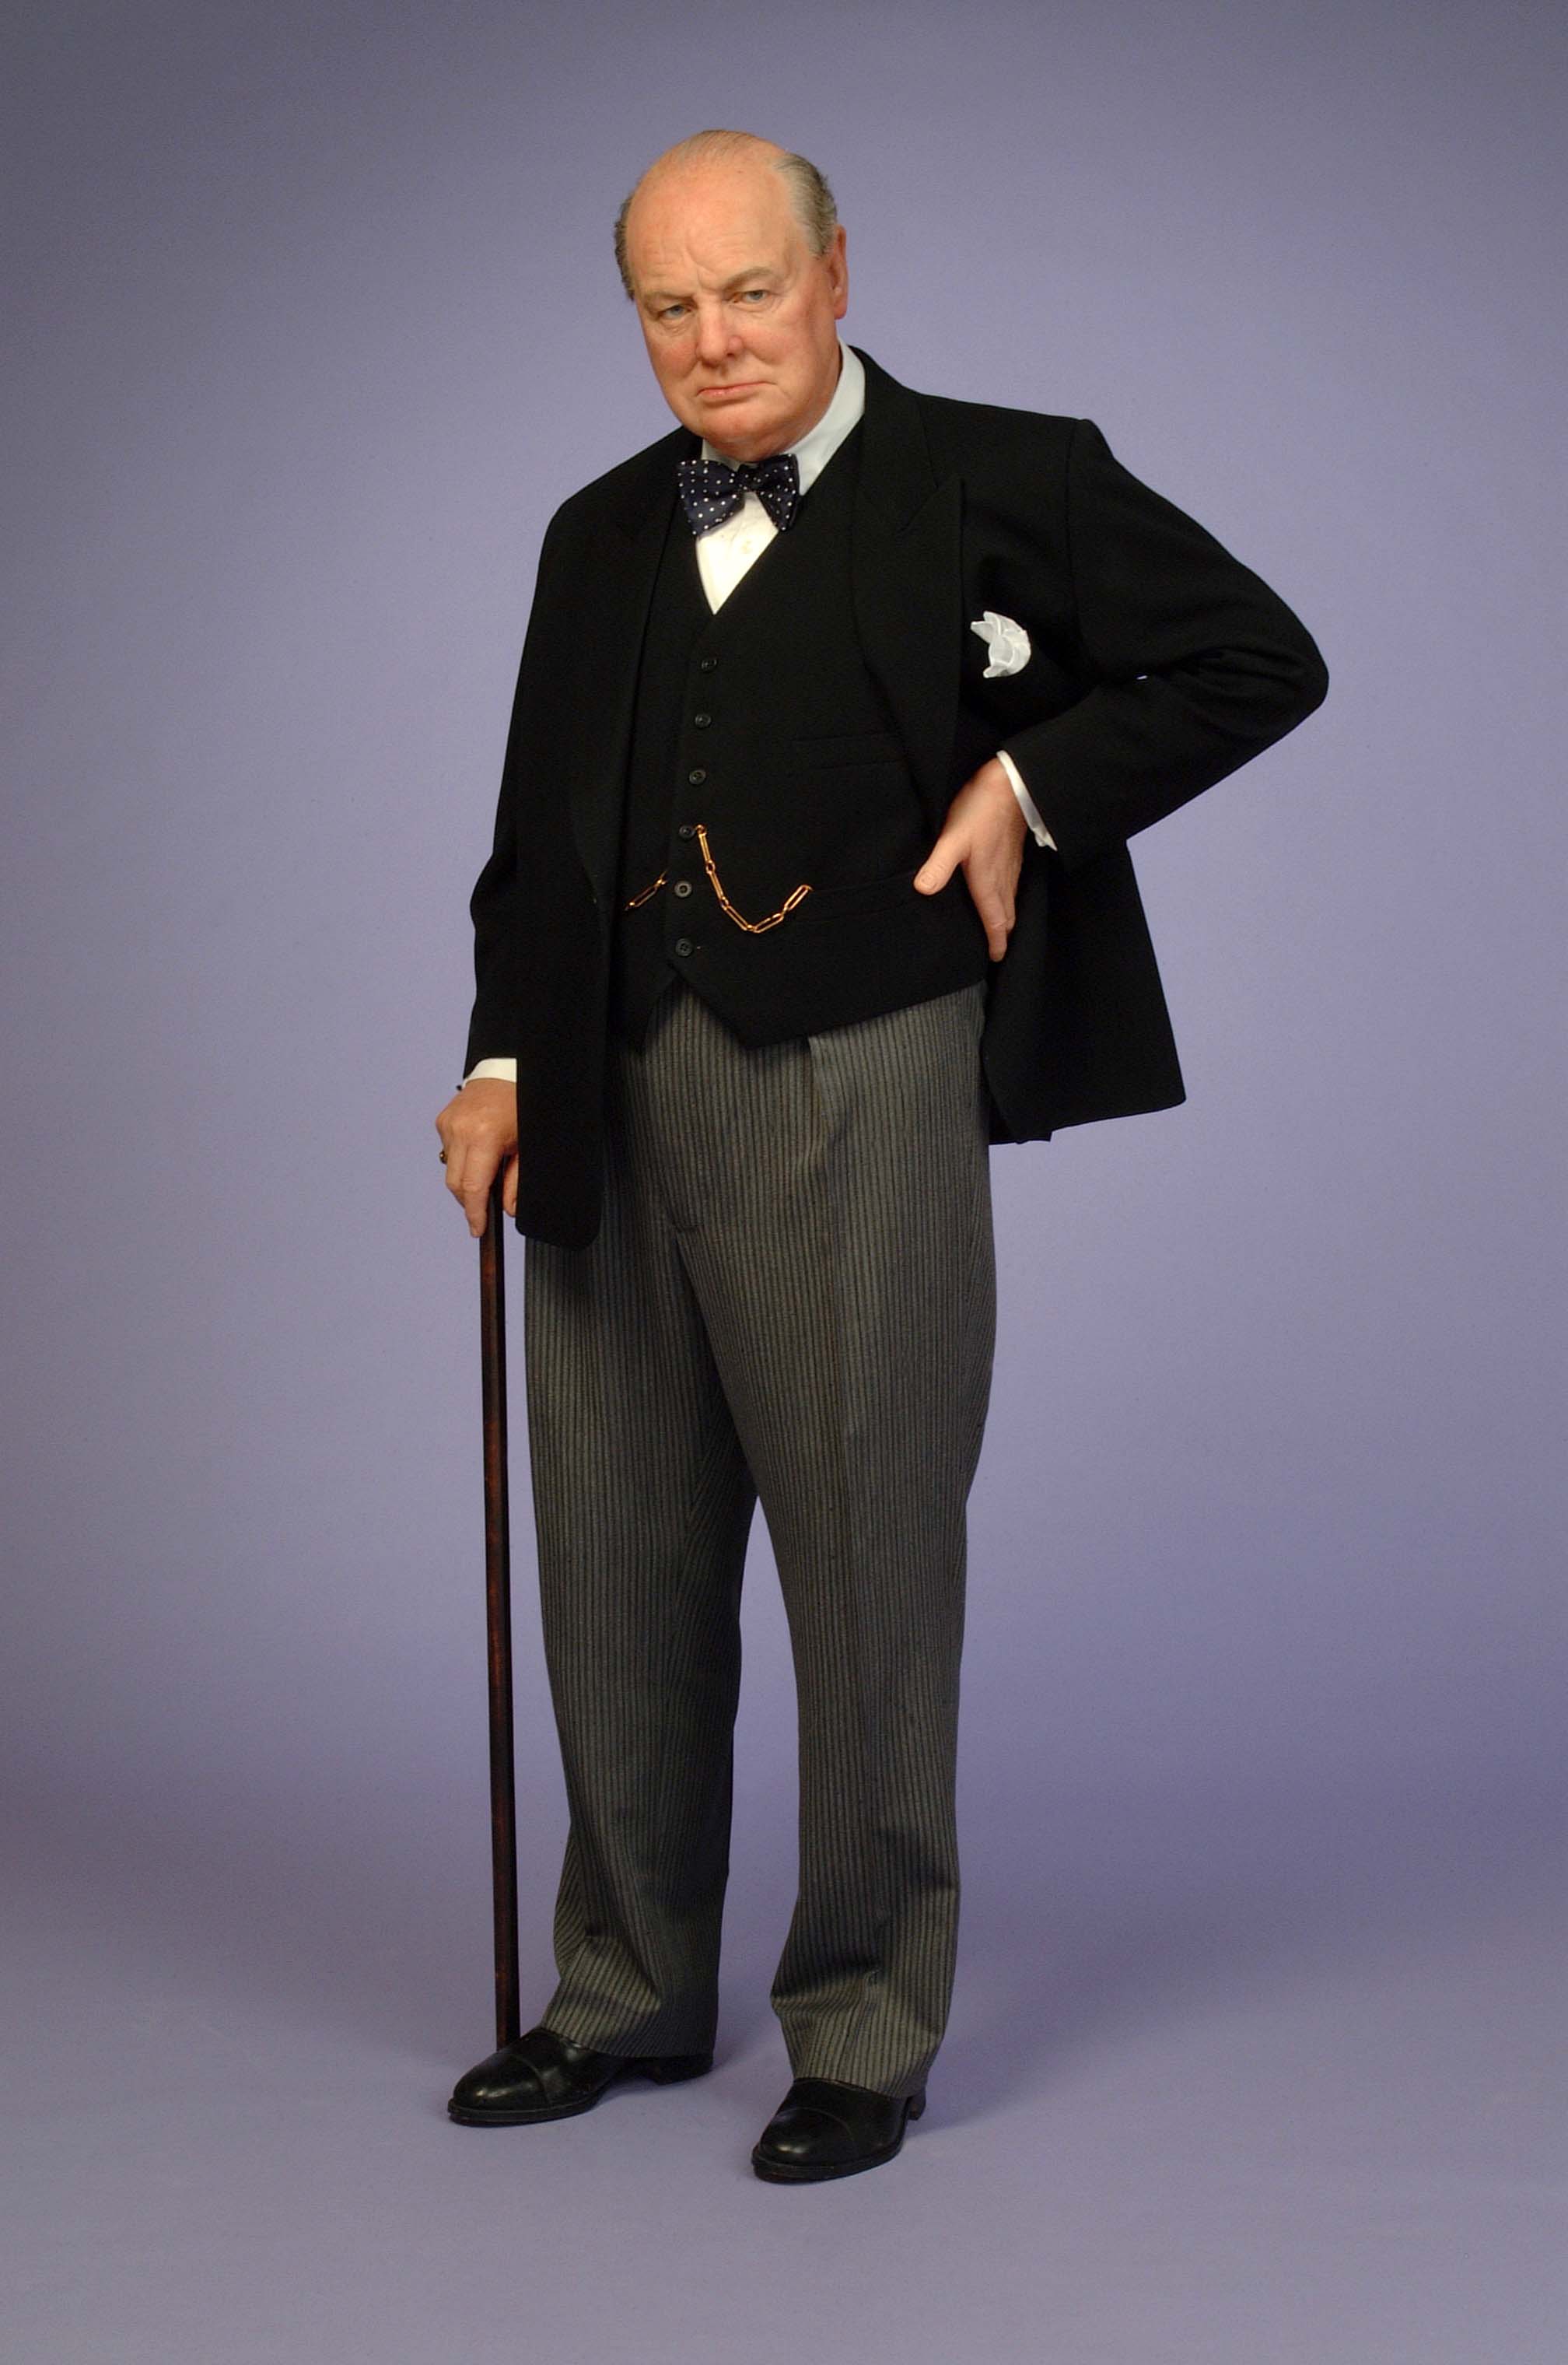 Wax figure of Winston Churchill at Madame Tussauds™ Vienna